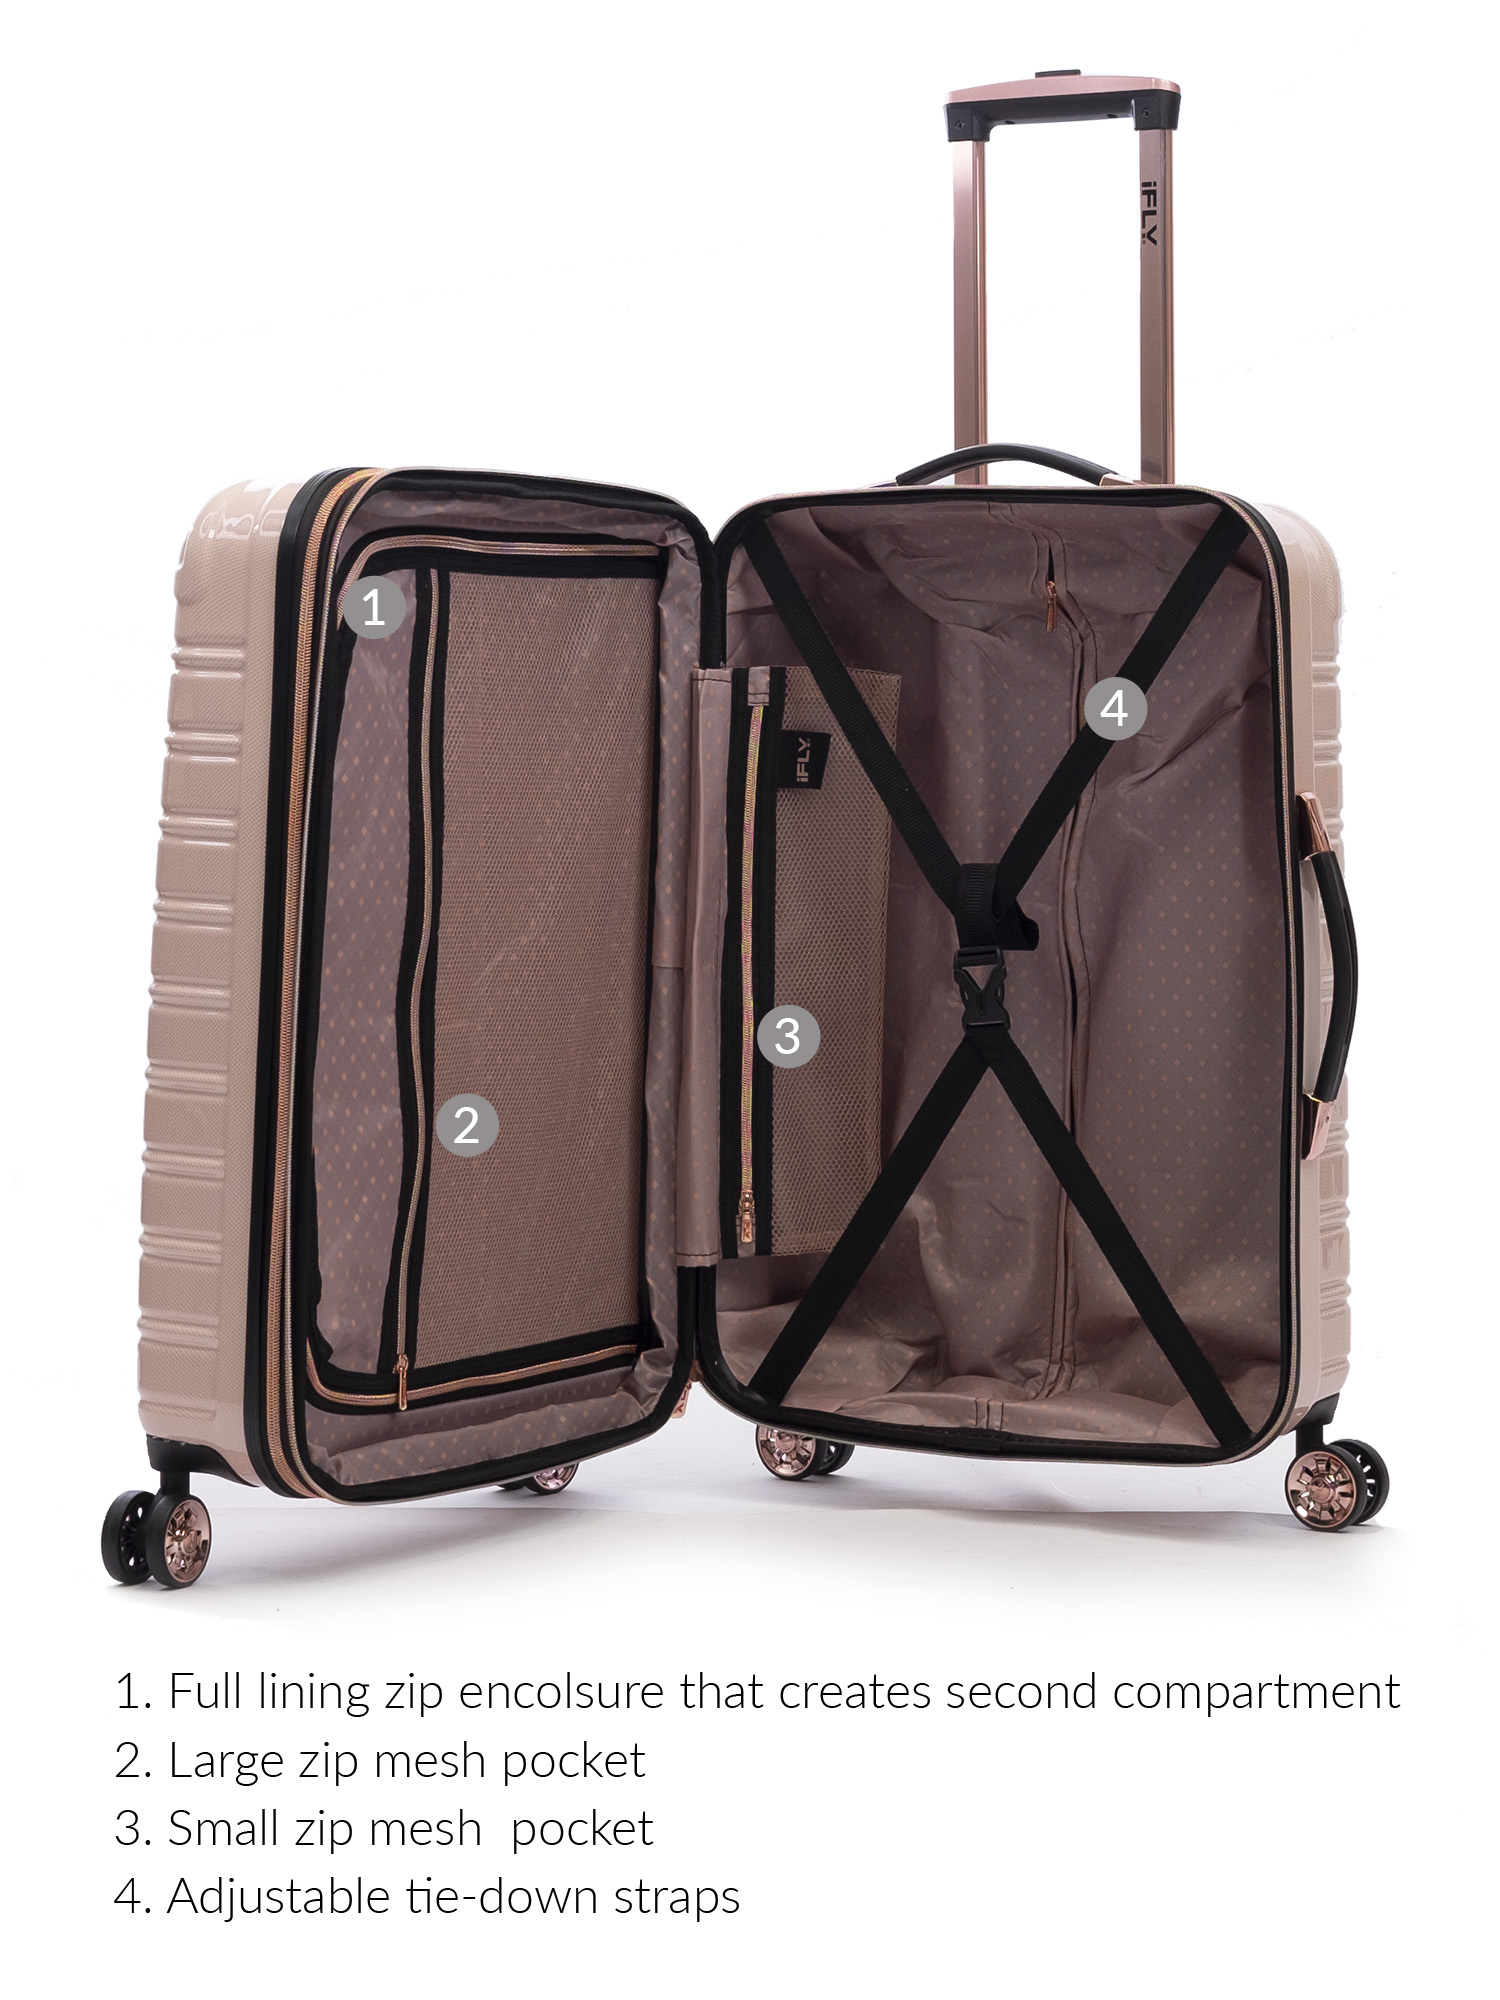 iFLY Hardside Luggage Fibertech 20 Inch Carry-on, Blush/Rose Gold - image 4 of 8